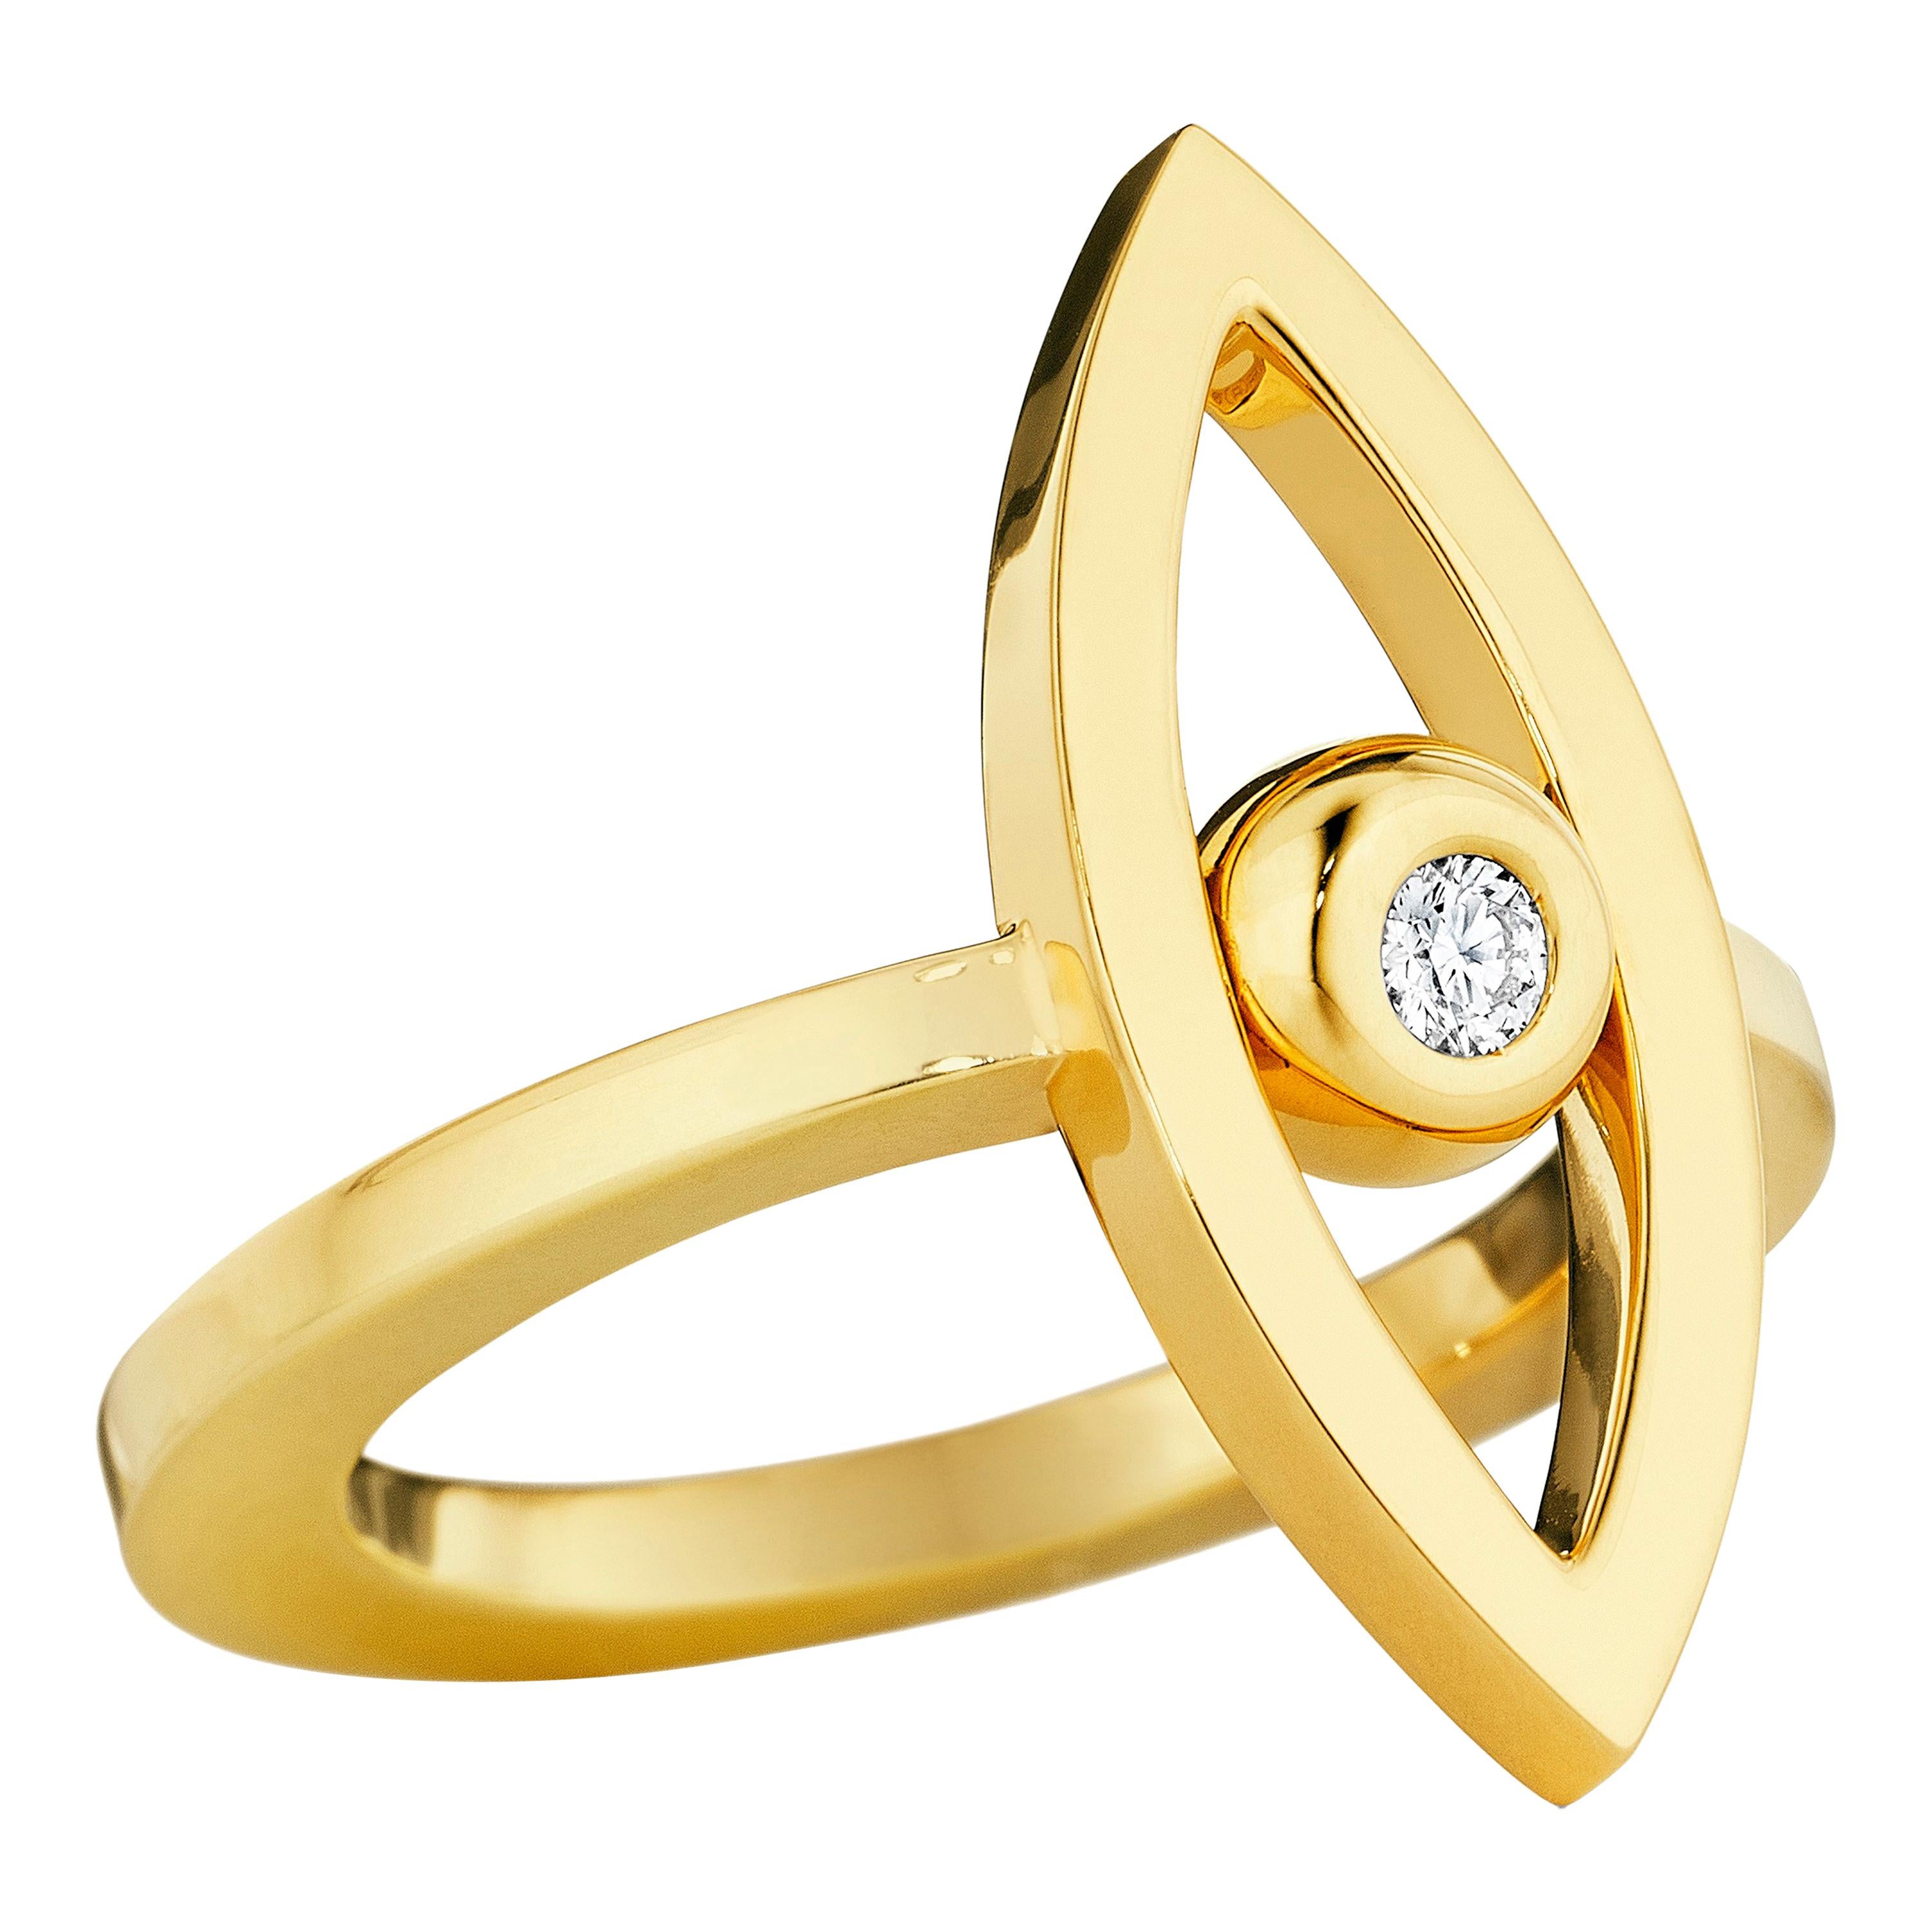 CADAR Reflections Ring, 18 Karat Yellow Gold and White Diamond